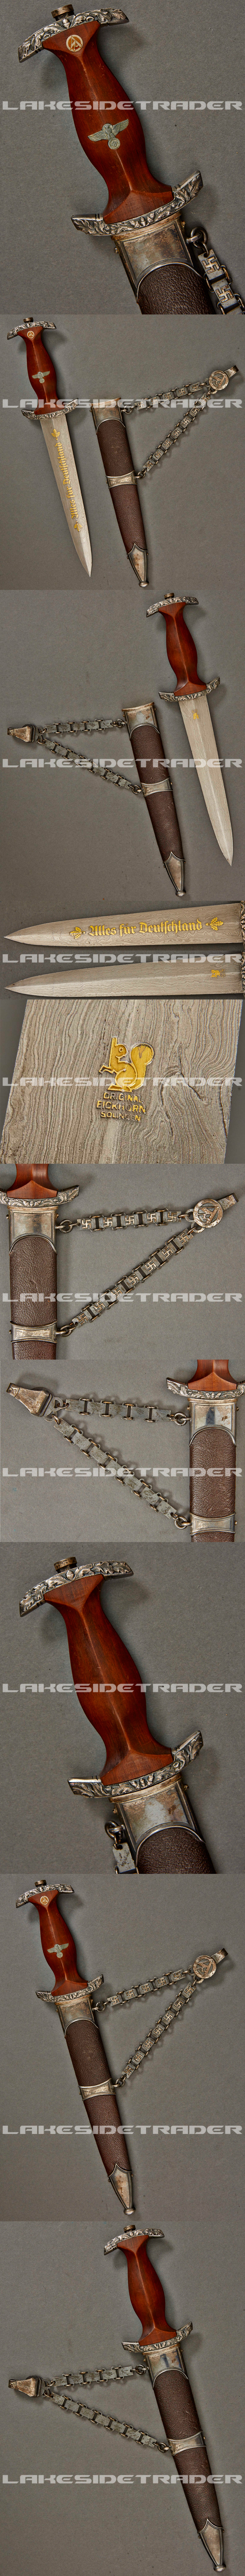 Chained SA High Leaders Dagger by Carl Eickhorn